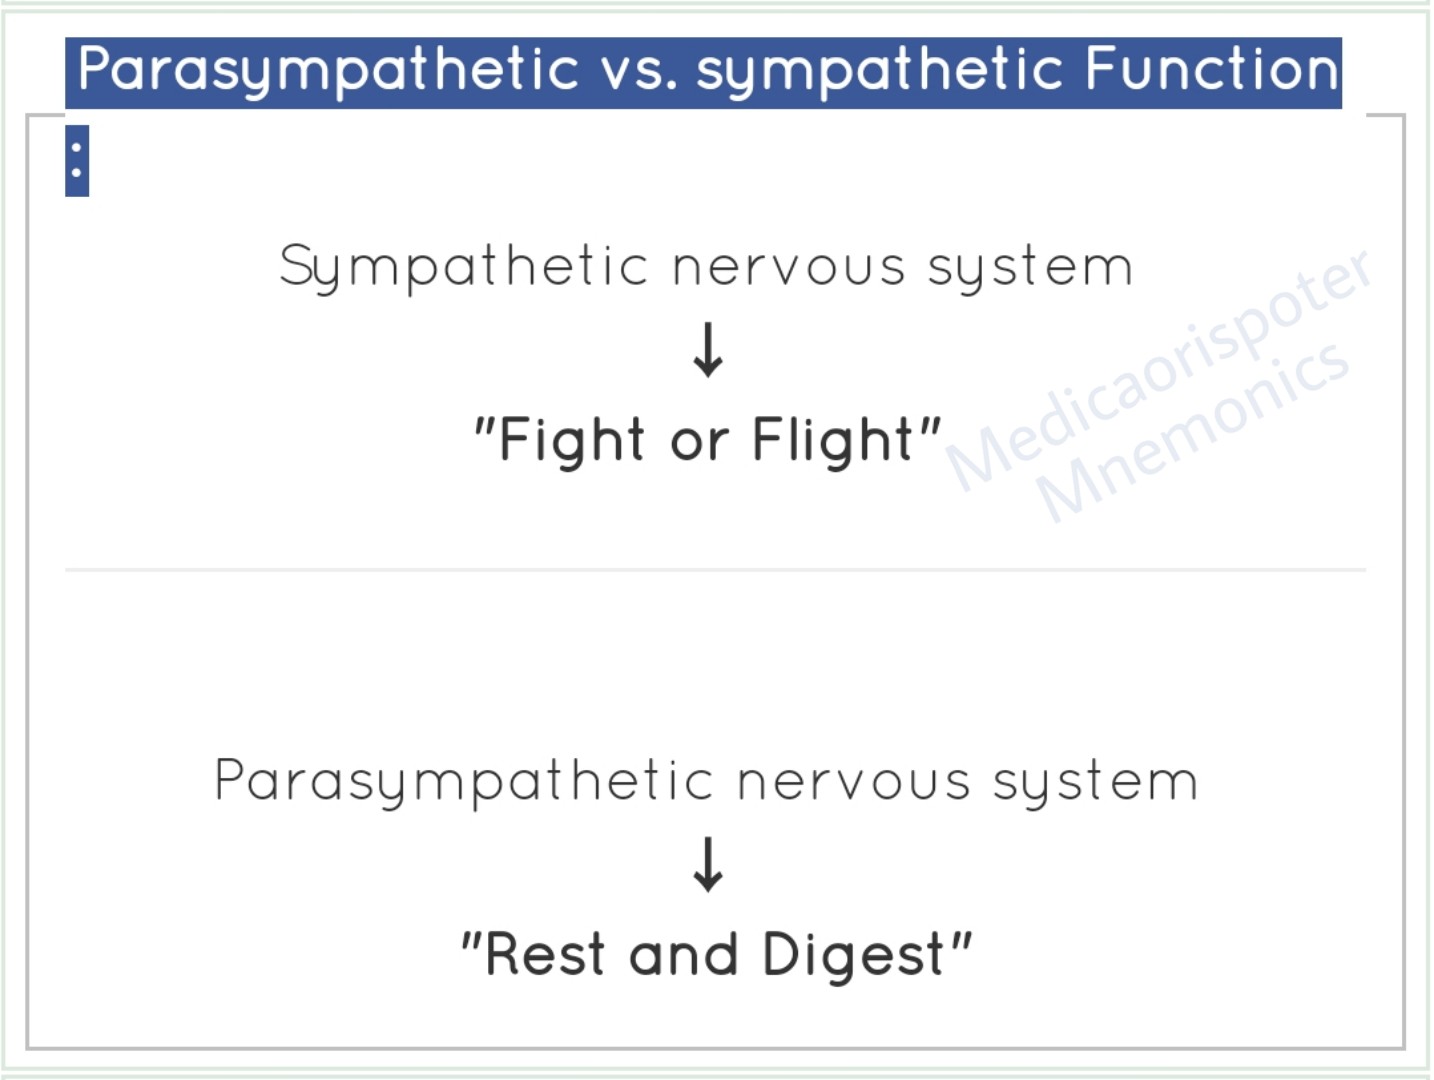 Functions of Sympathetic vs Parasympathetic